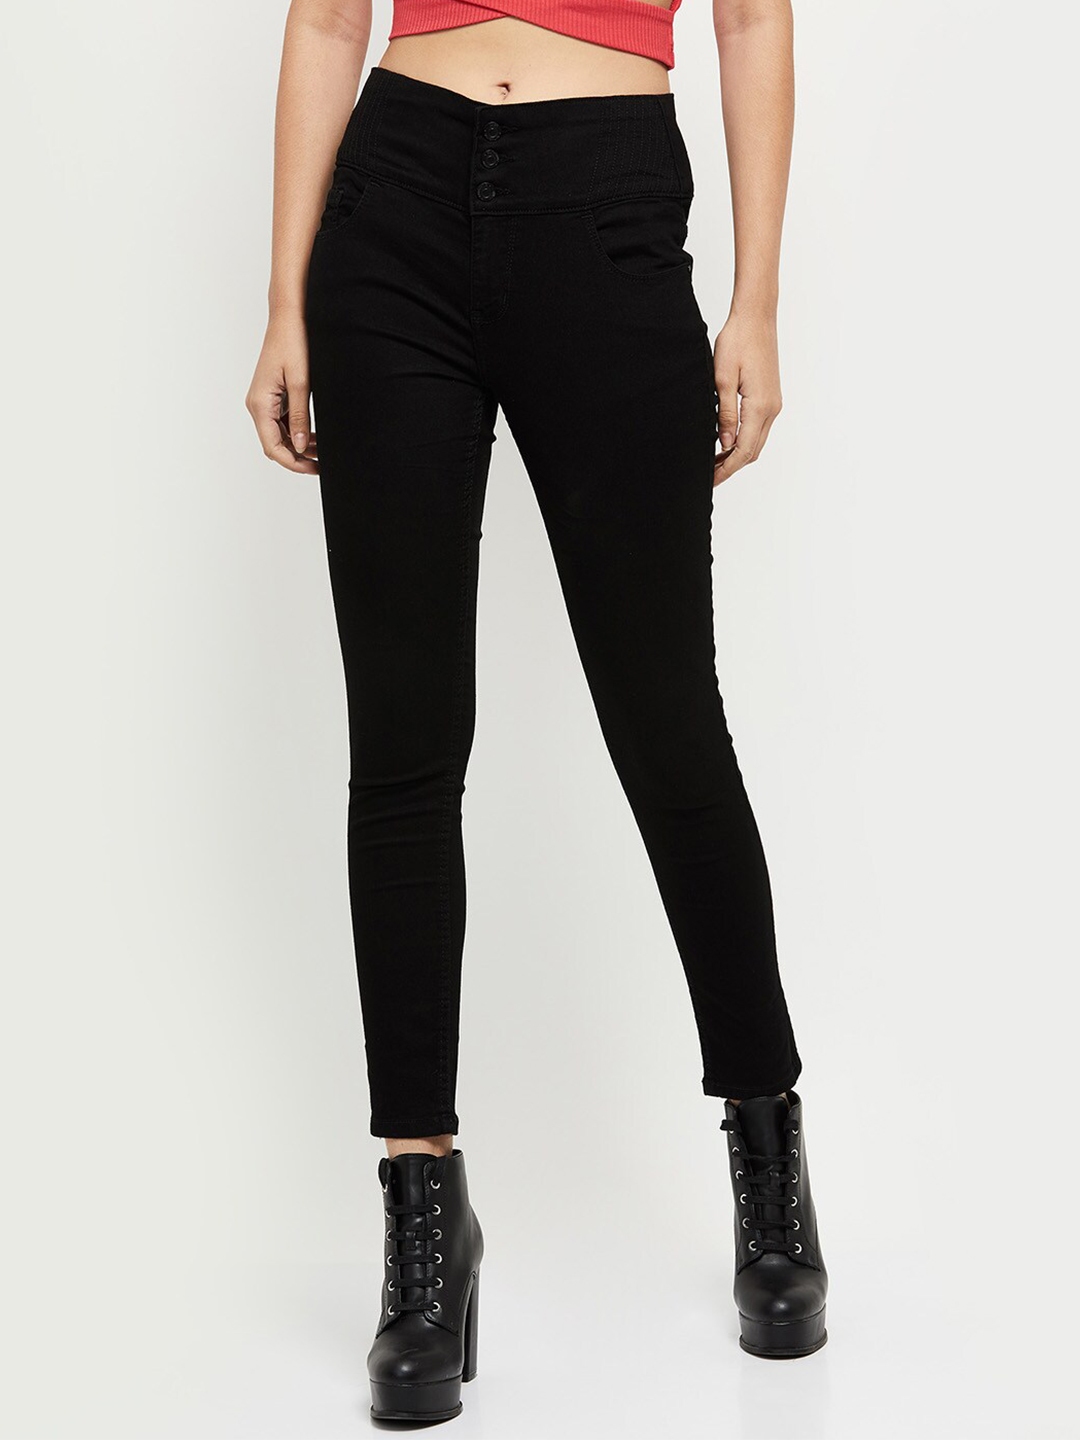 Buy Max Women Black Solid Jeans - Jeans for Women 17680912 | Myntra